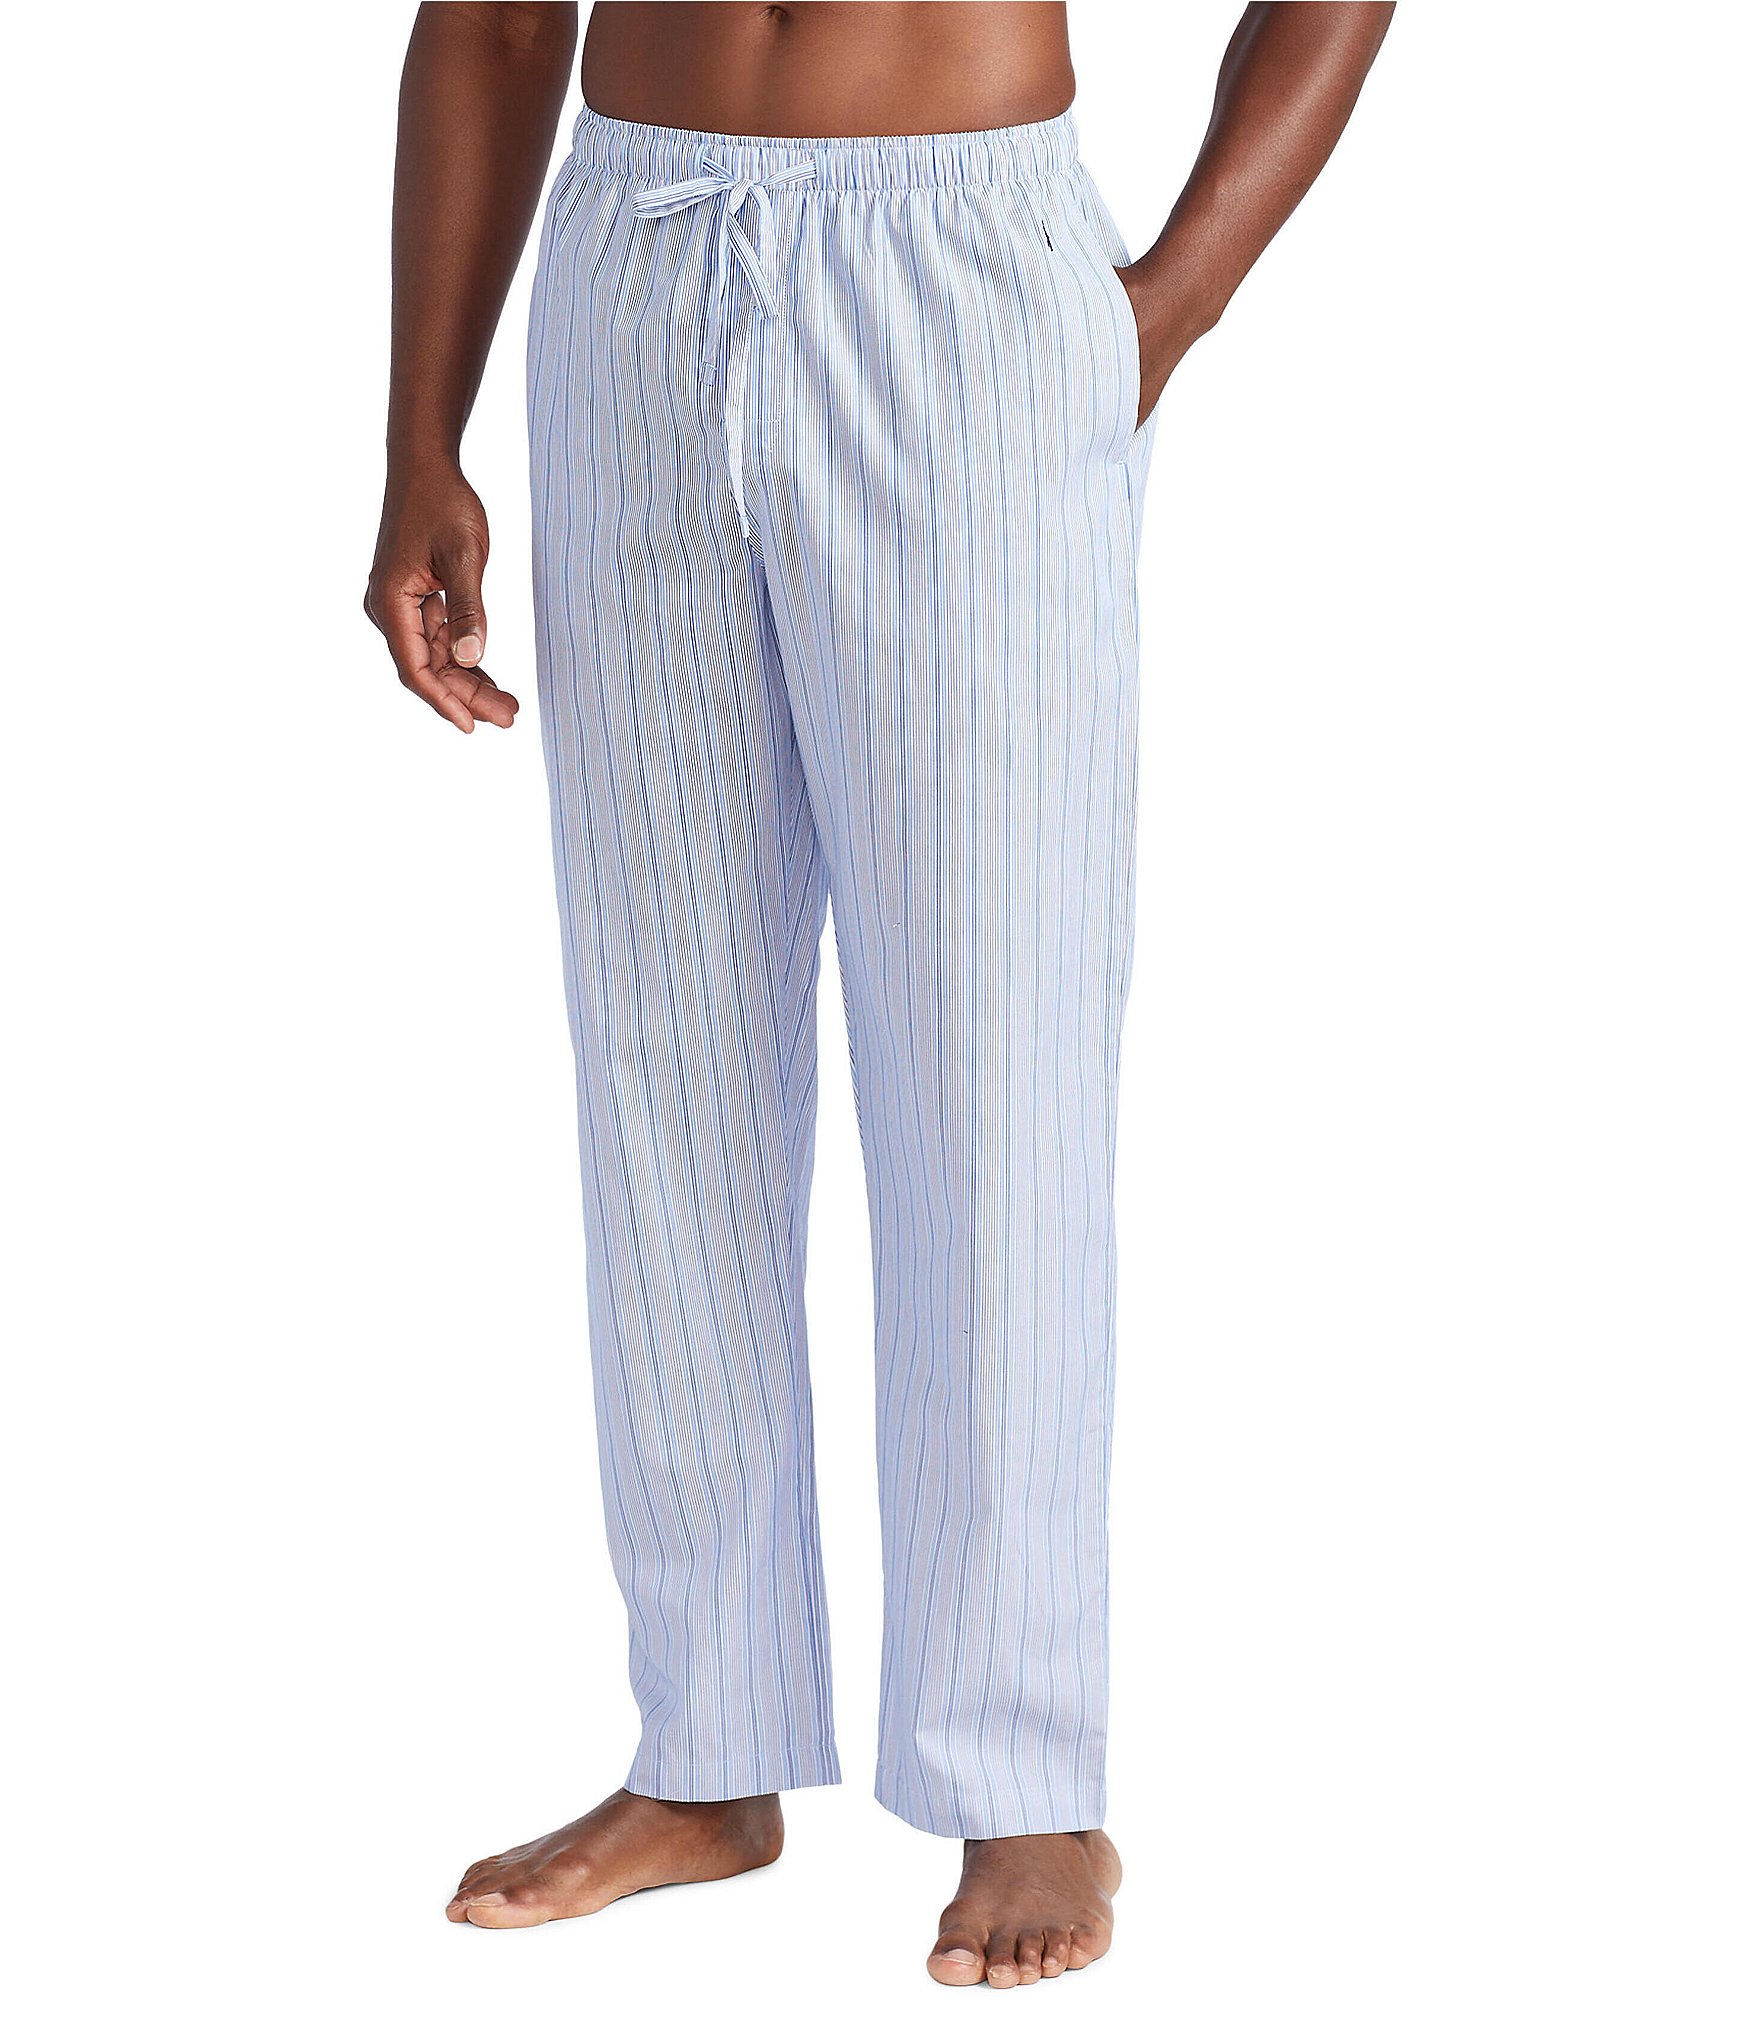 Men's Striped Pyjama Bottoms By PJ Pan